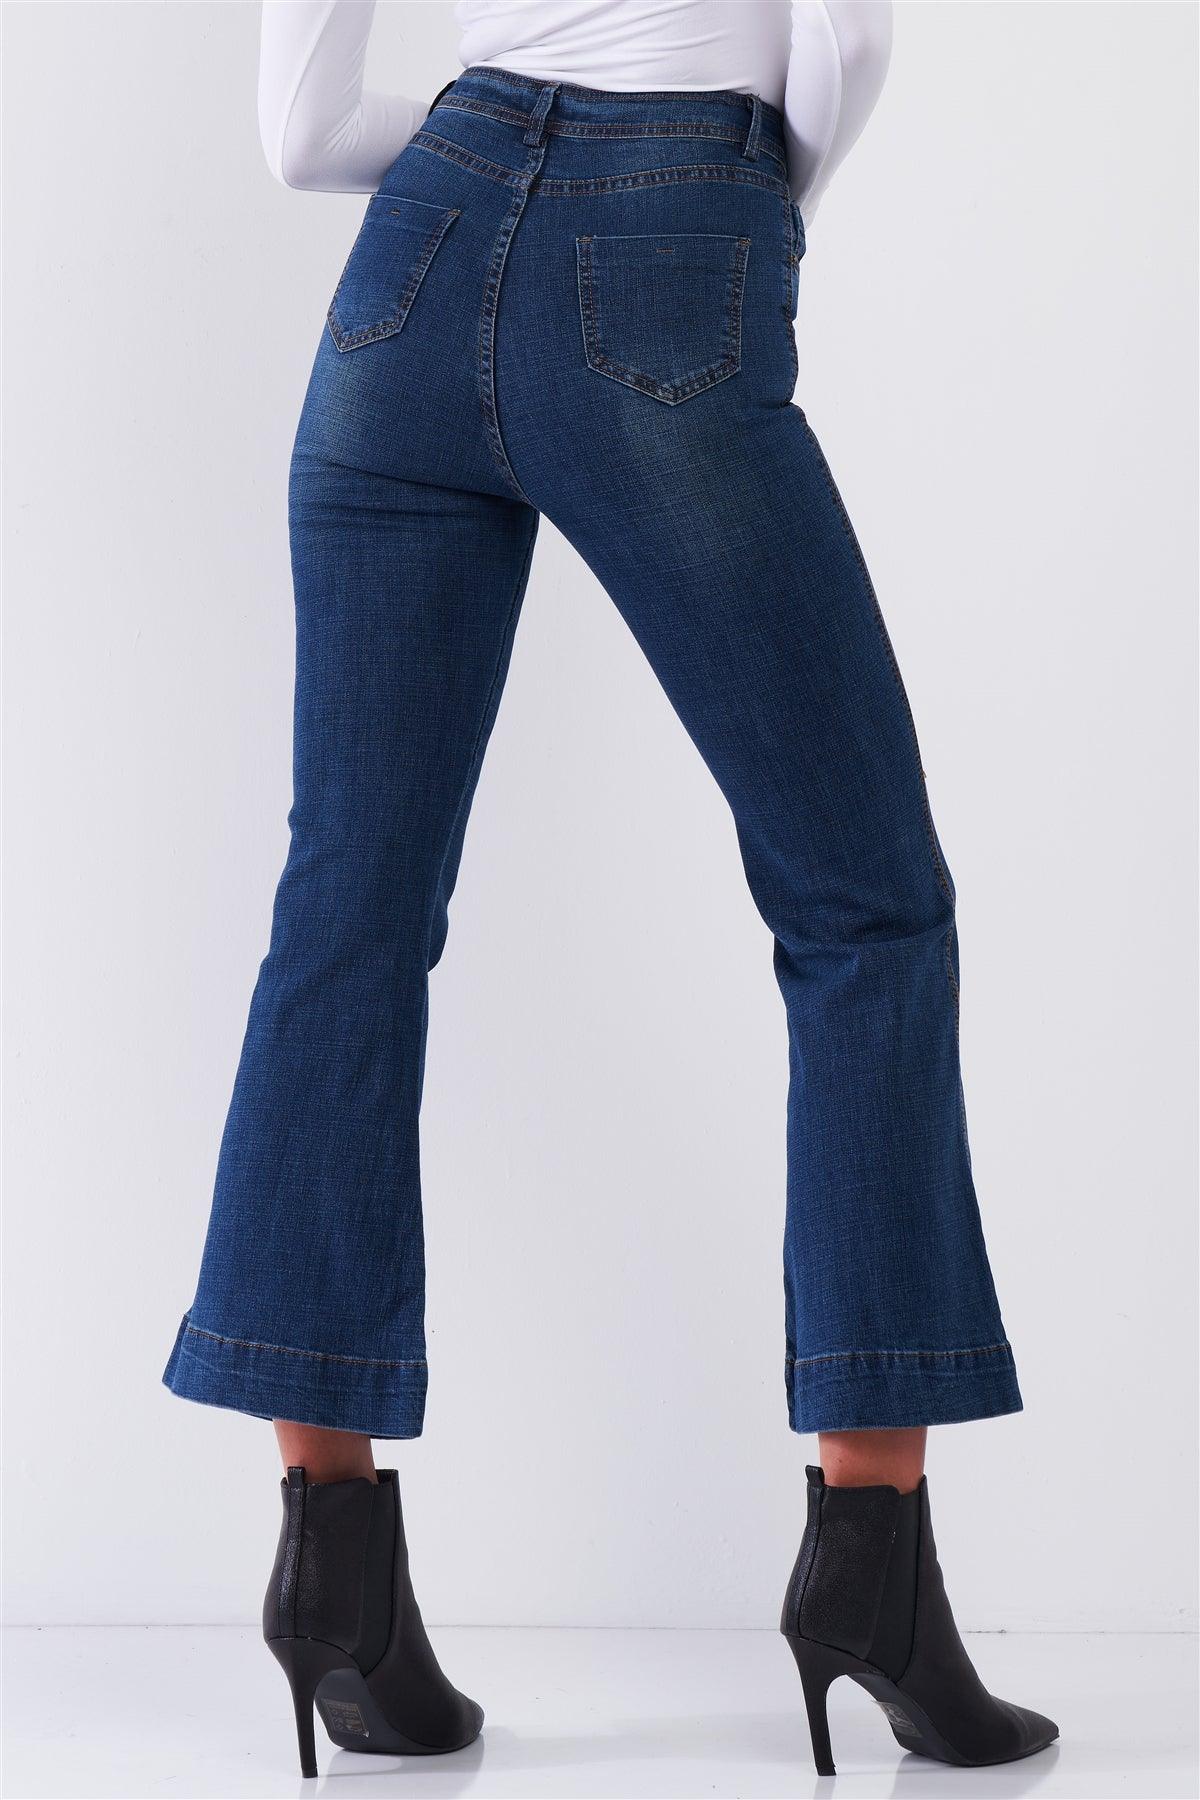 Blue Denim High Waisted Ankle Length Bell Bottom Flare Jeans /2-2-2